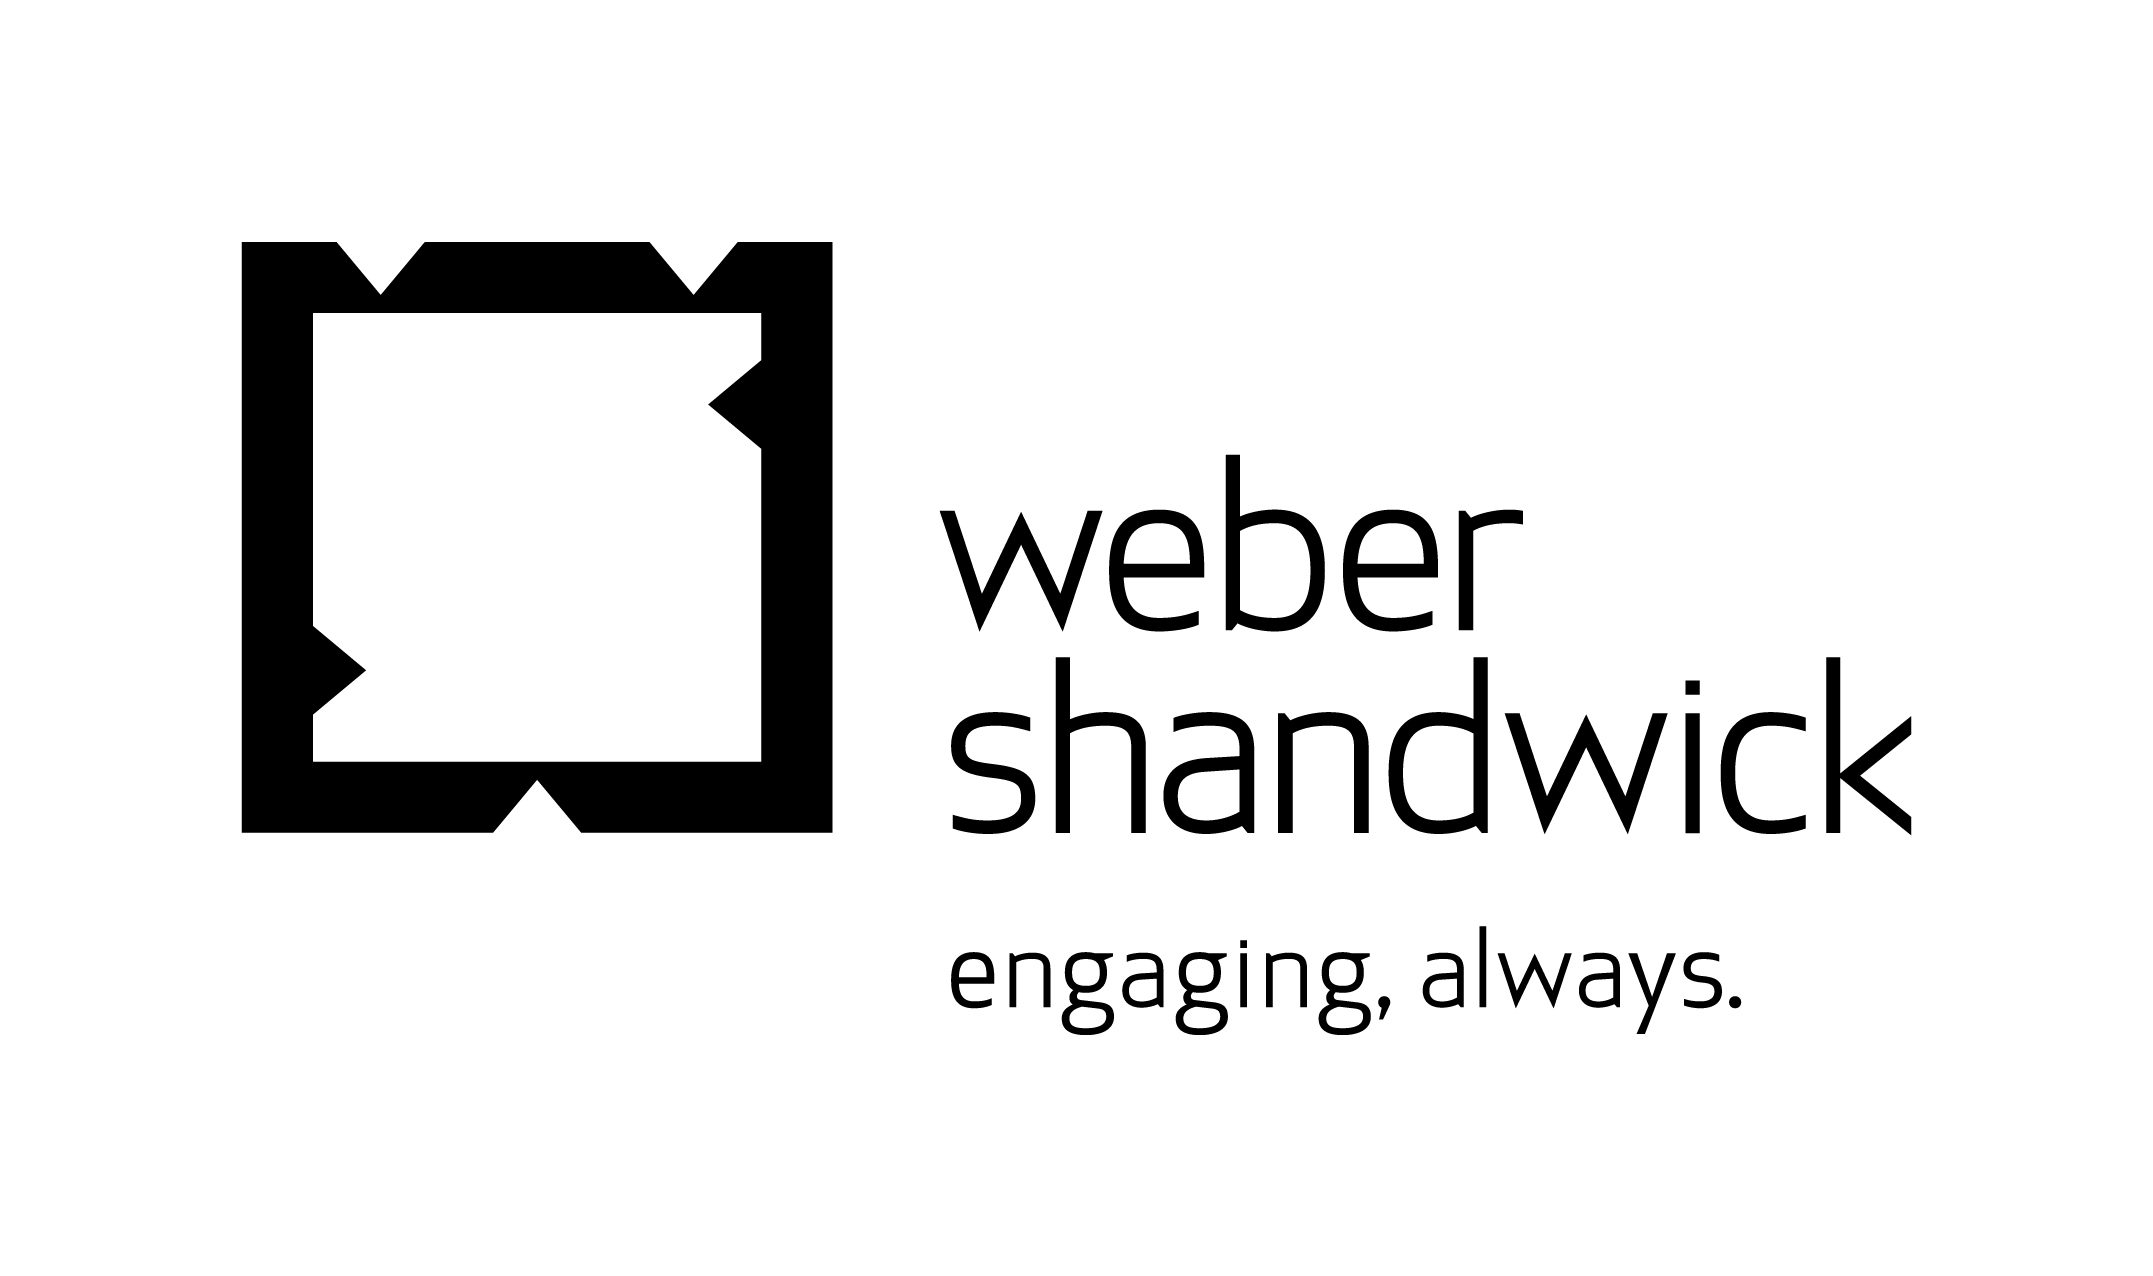 Dr. Weber Logo